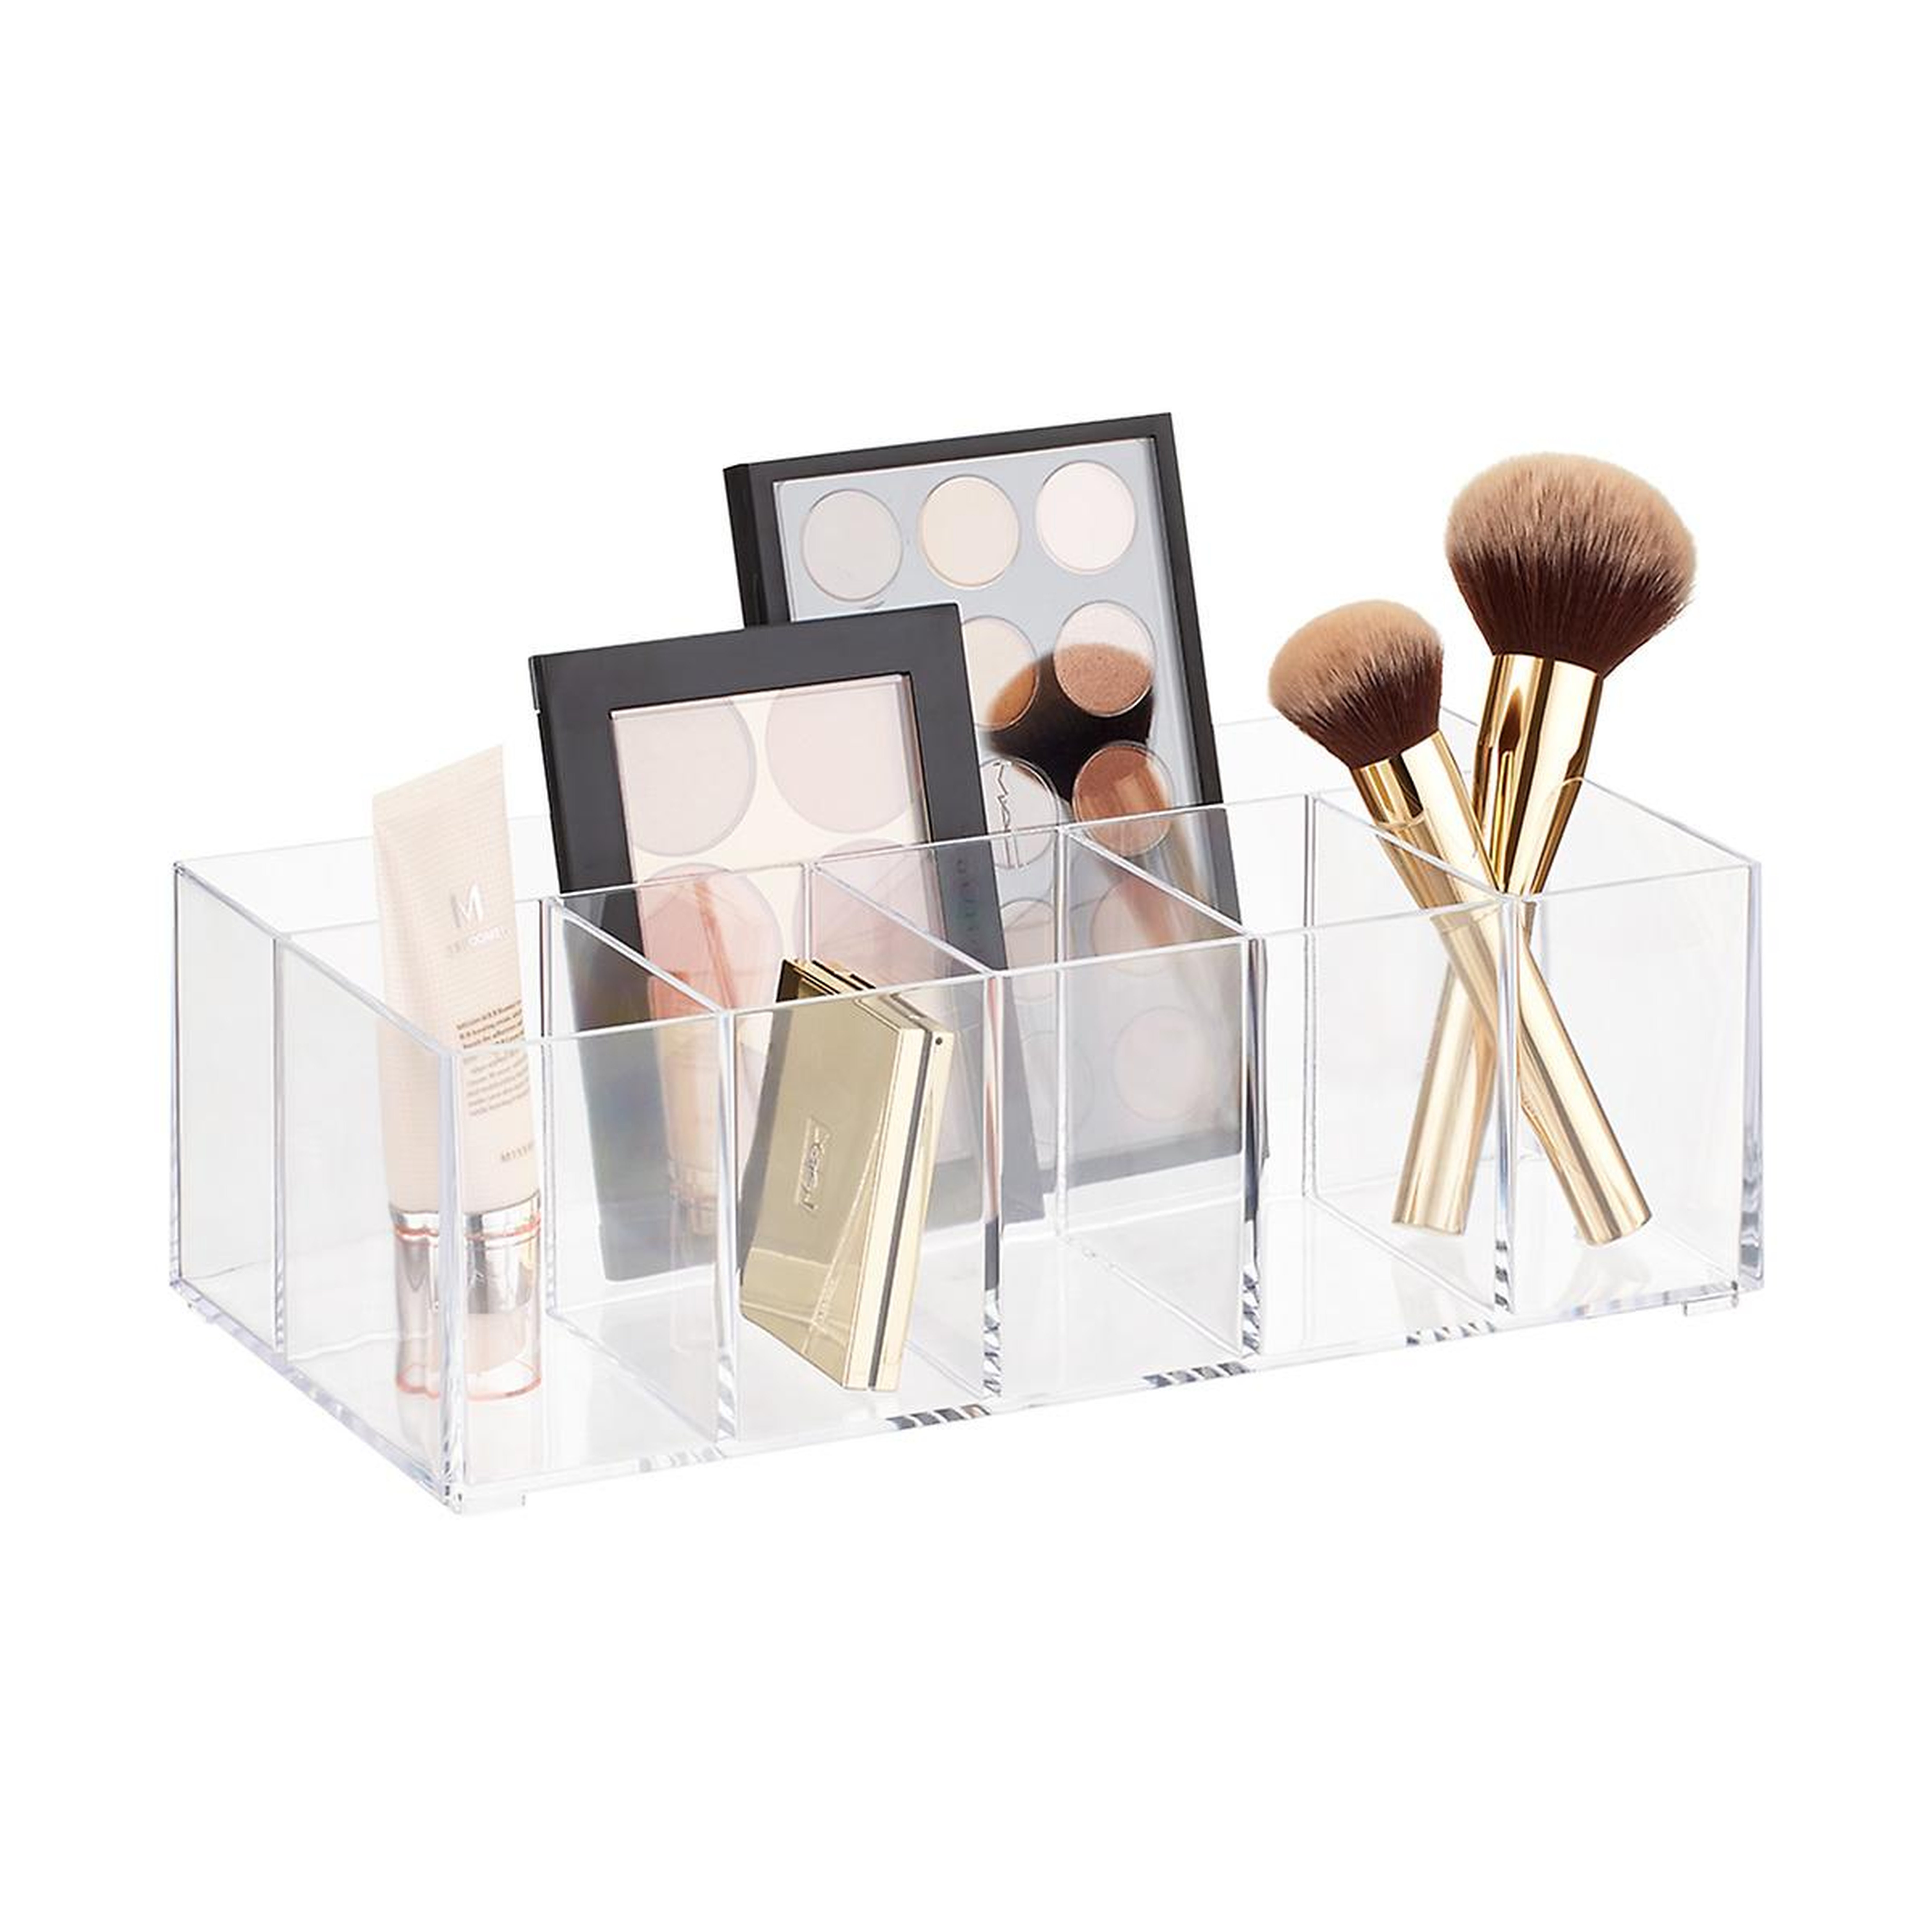 InterDesign Clarity Cosmetics & Vanity Organizer - containerstore.com